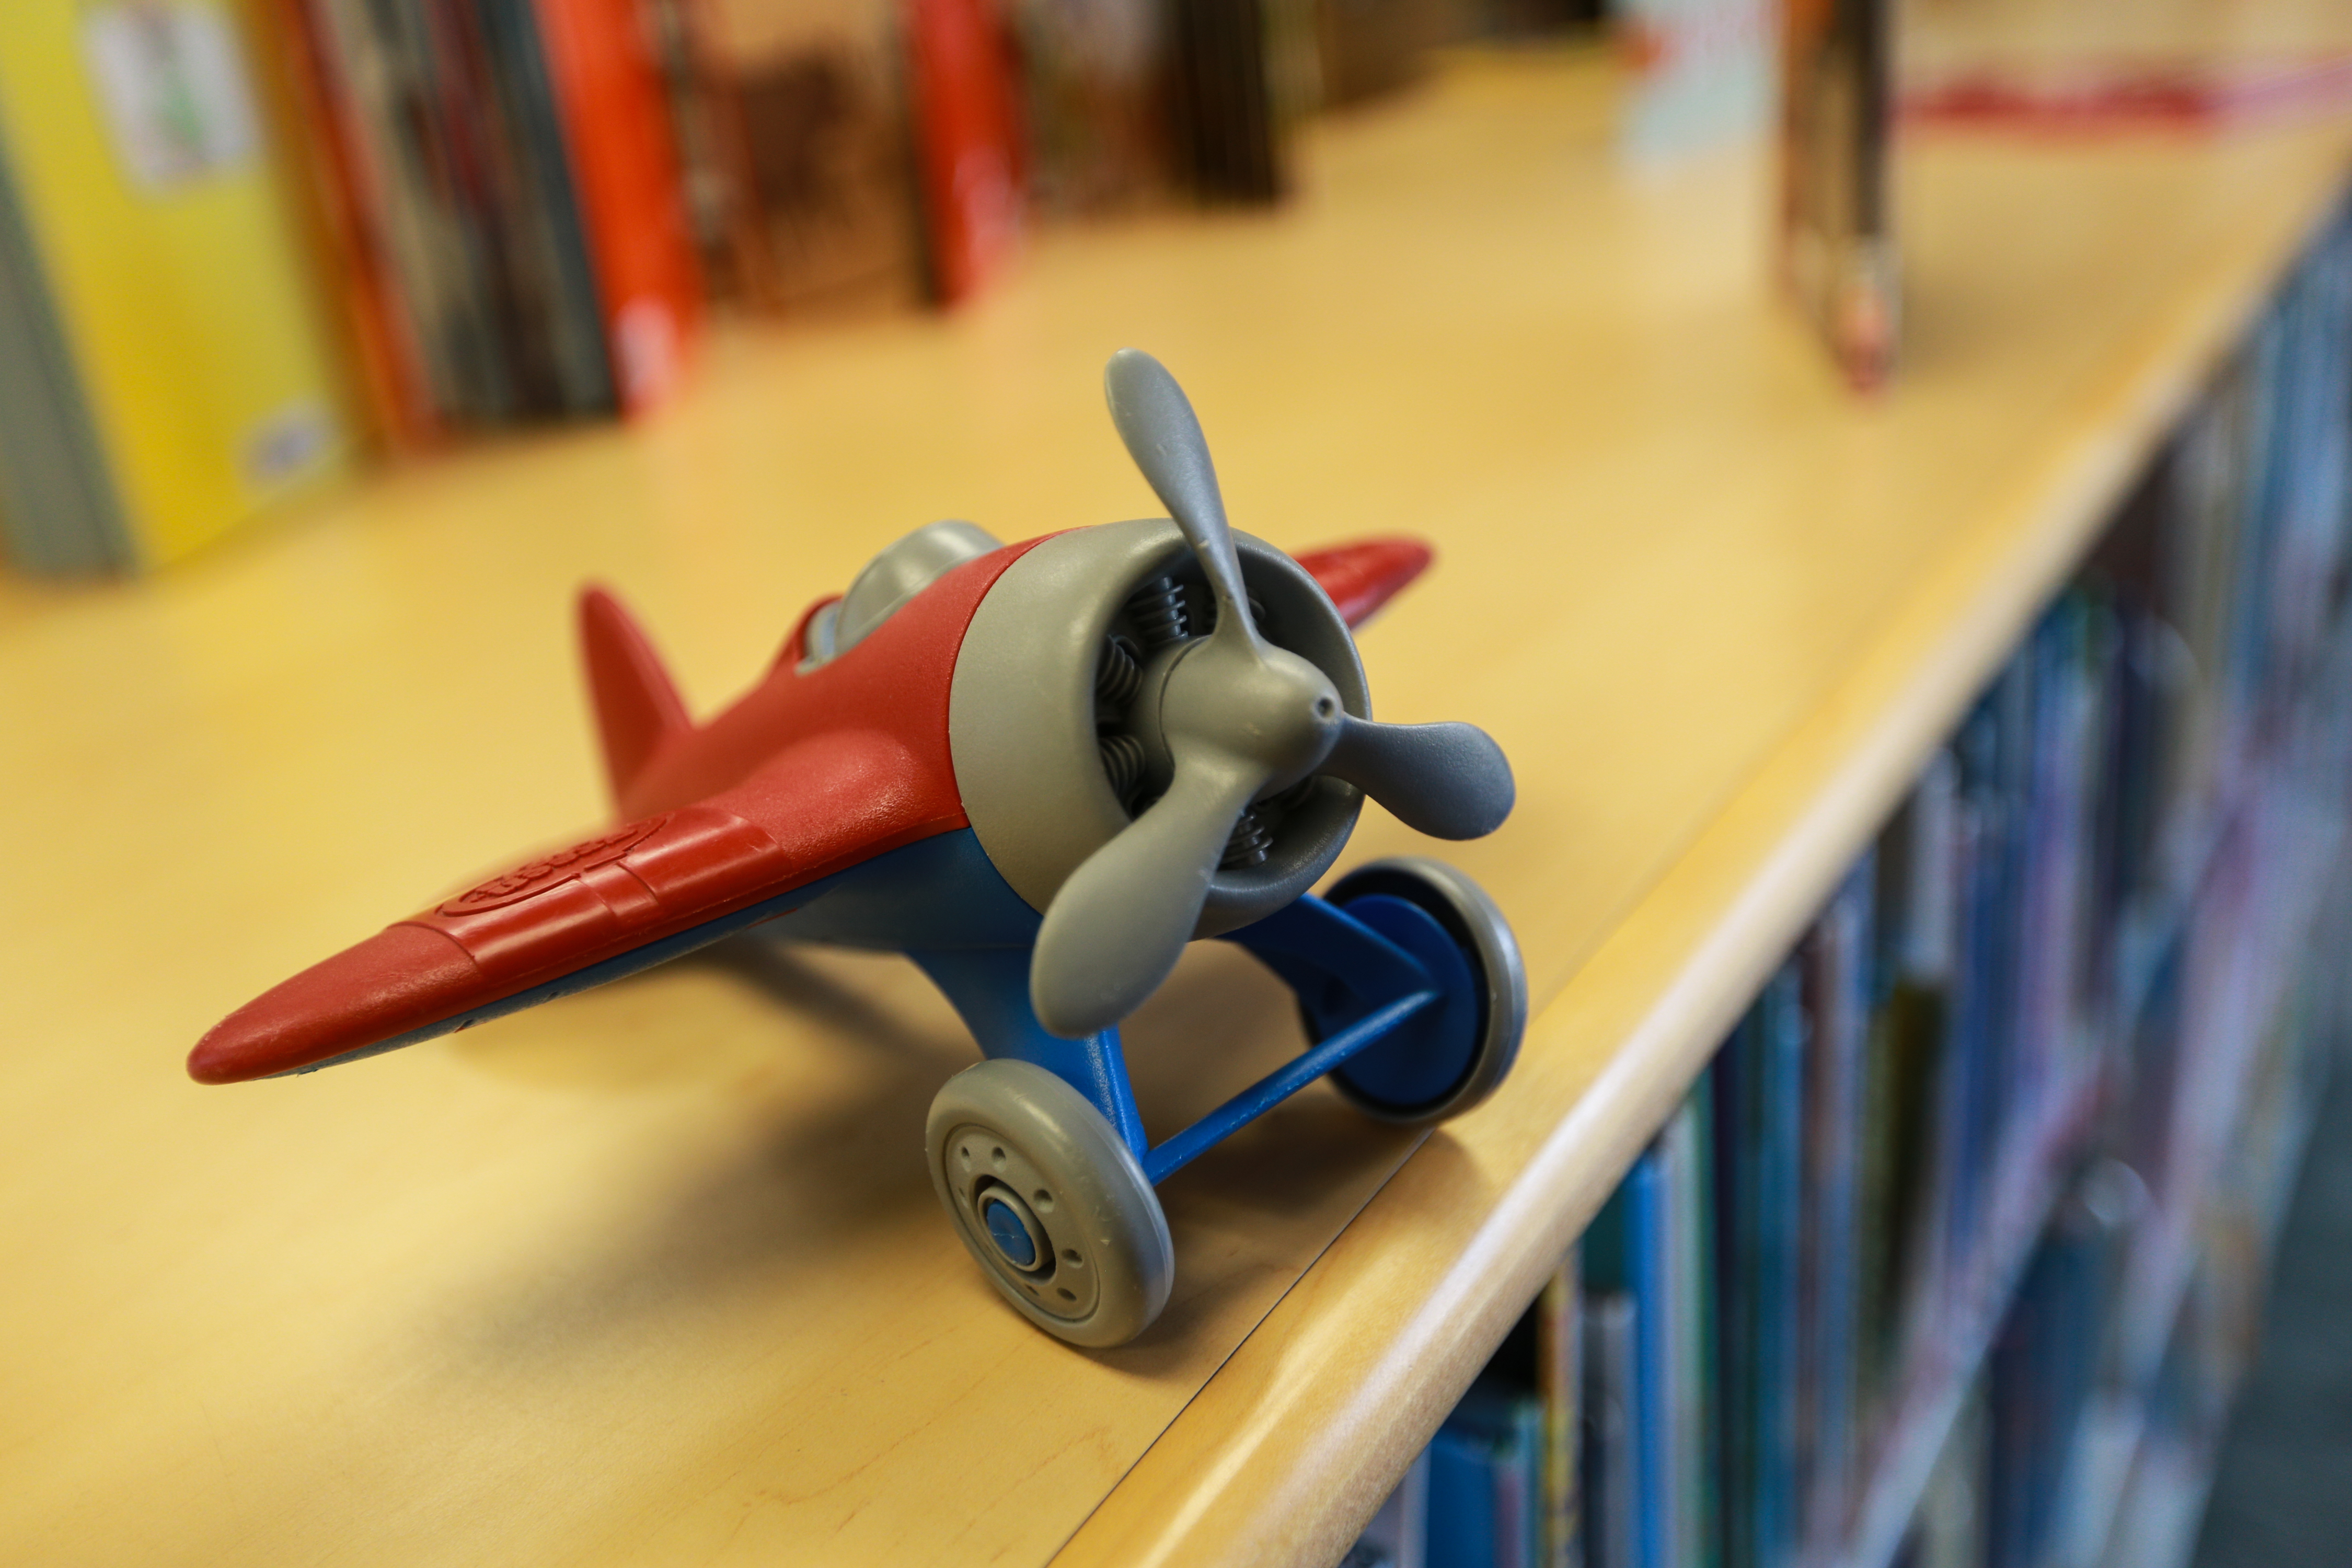 A toy aeroplane on a shelf